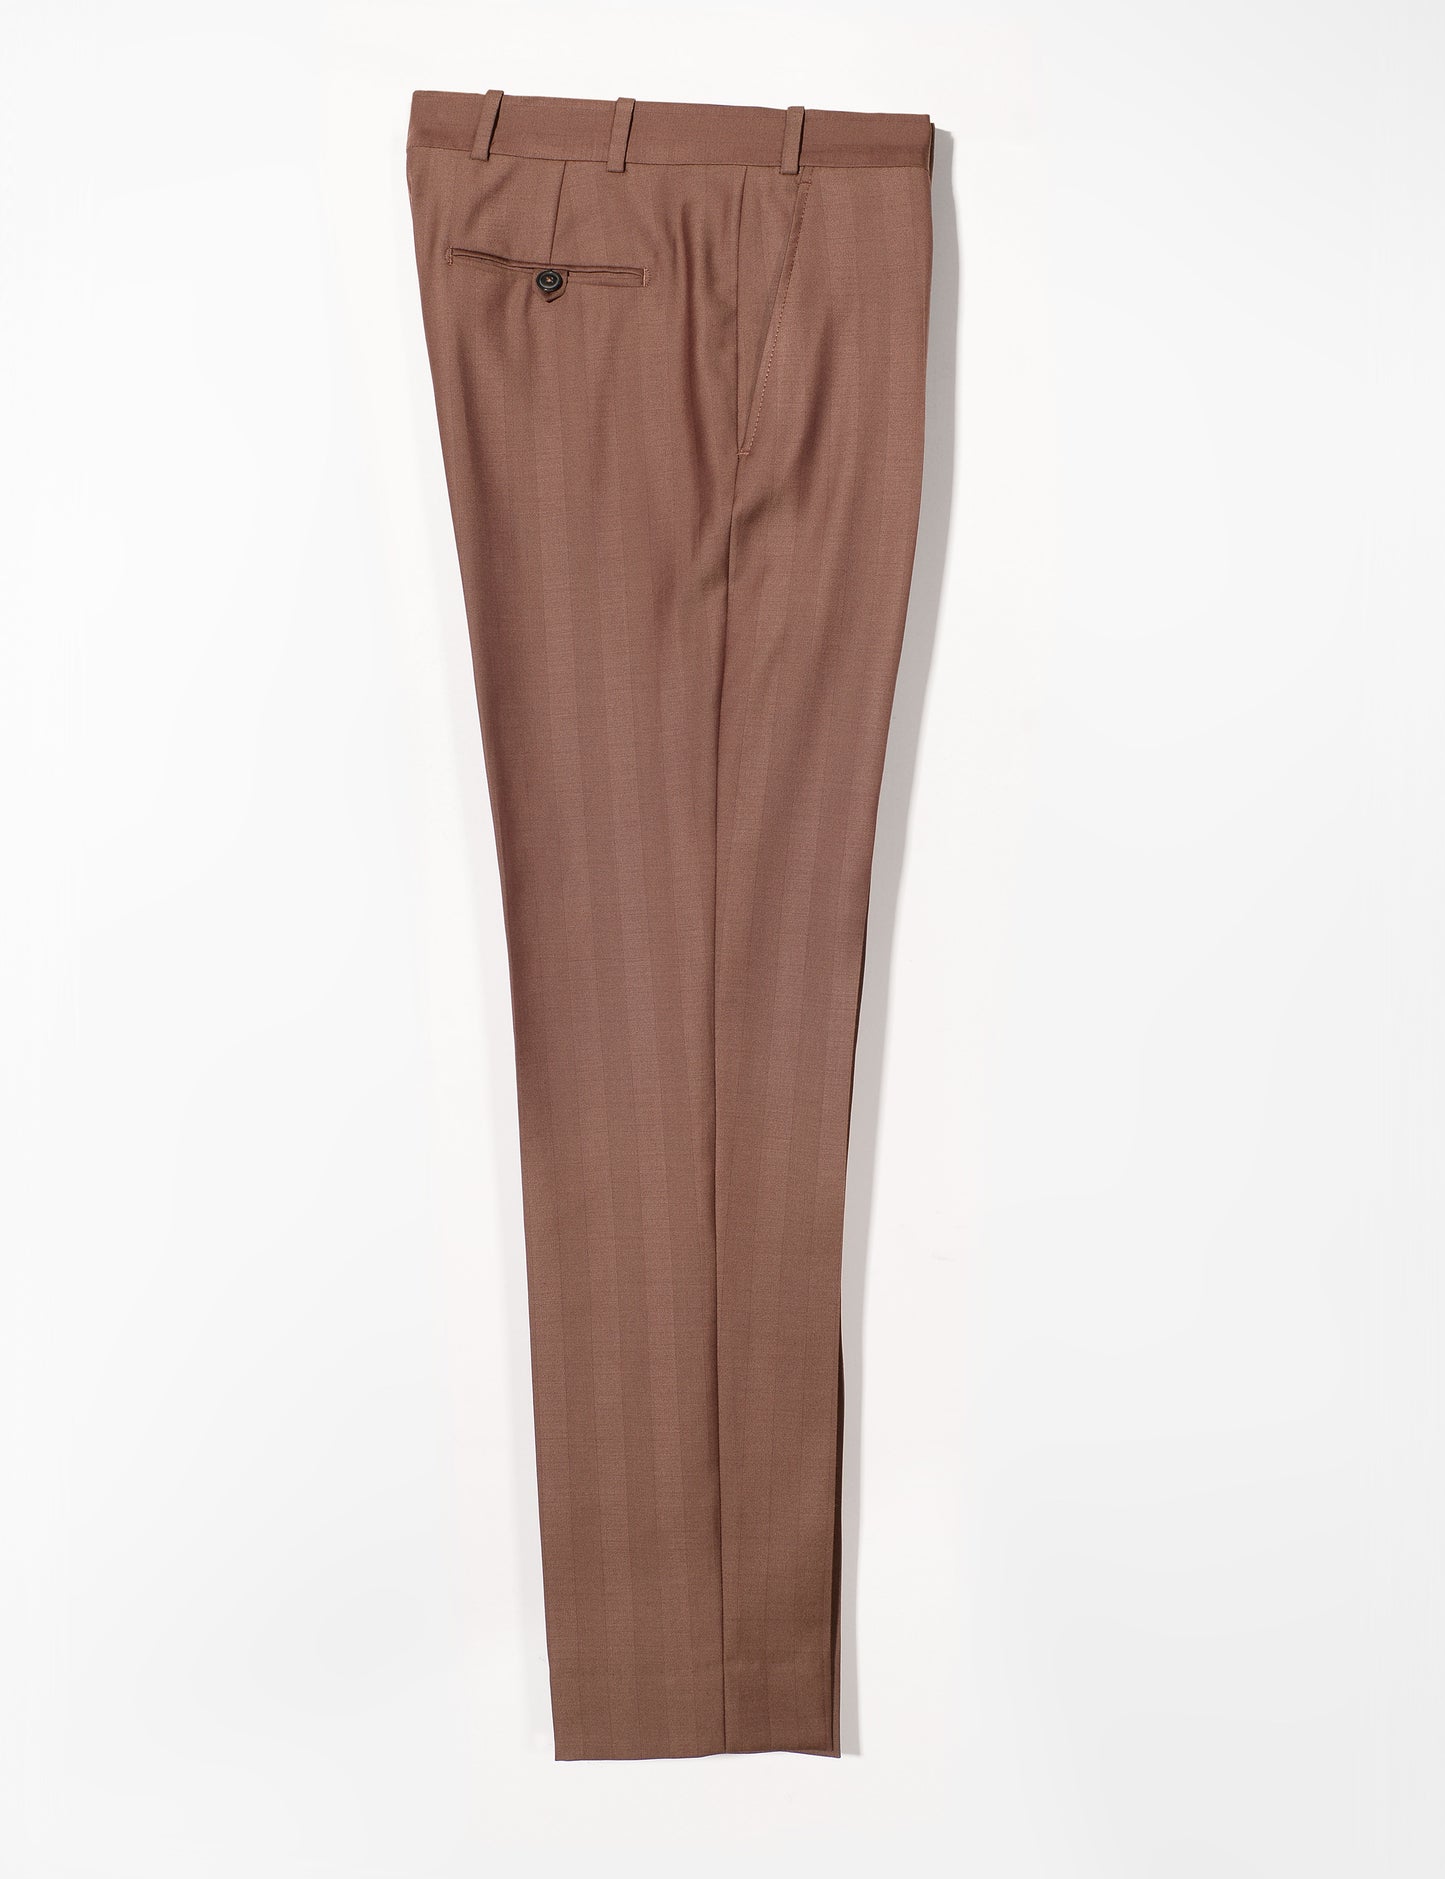 BKT50 Tailored Trousers in Wool Herringbone - Sepia